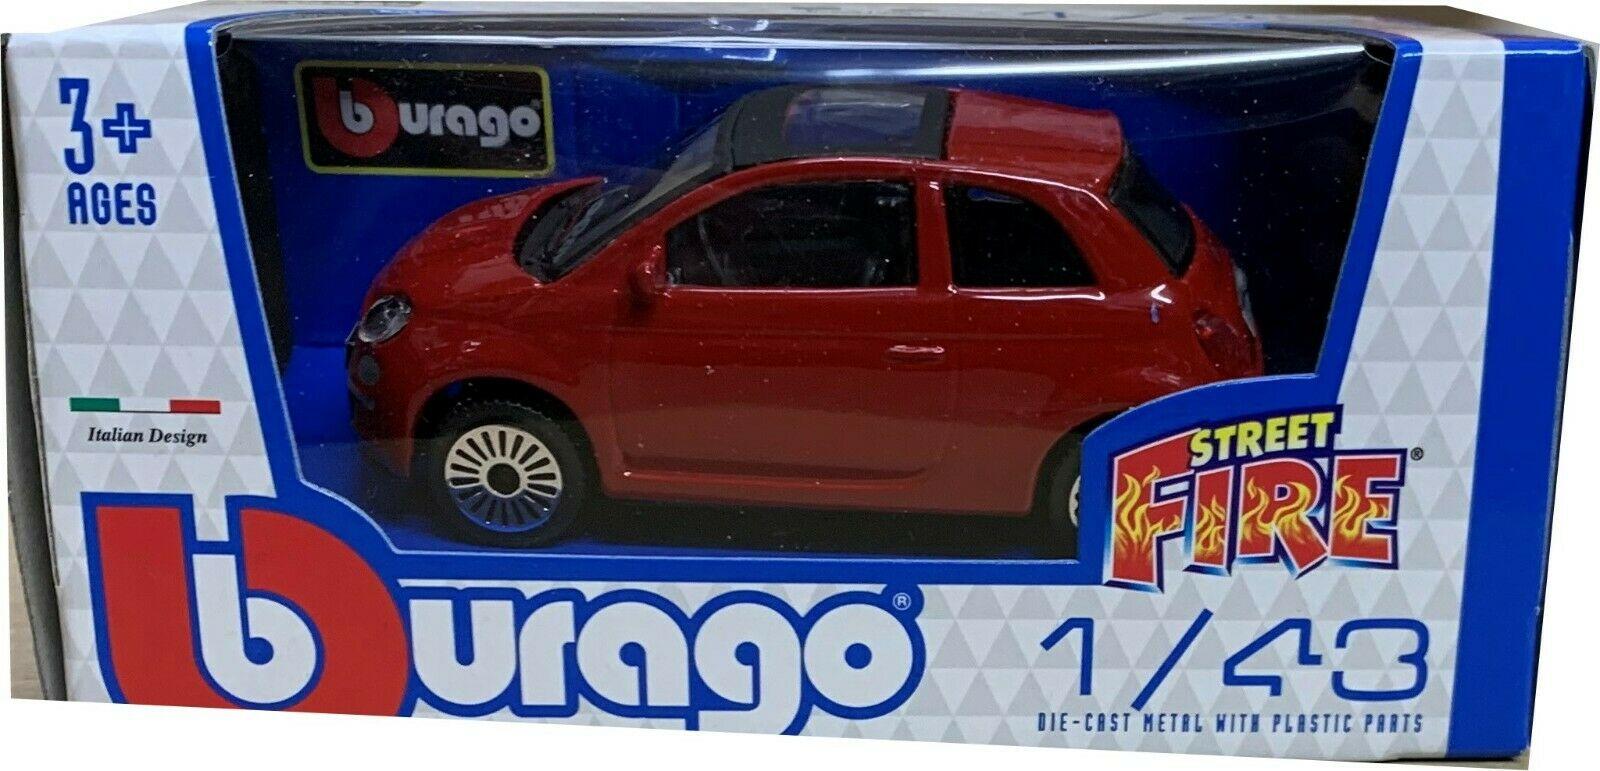 Fiat 500 streefire box